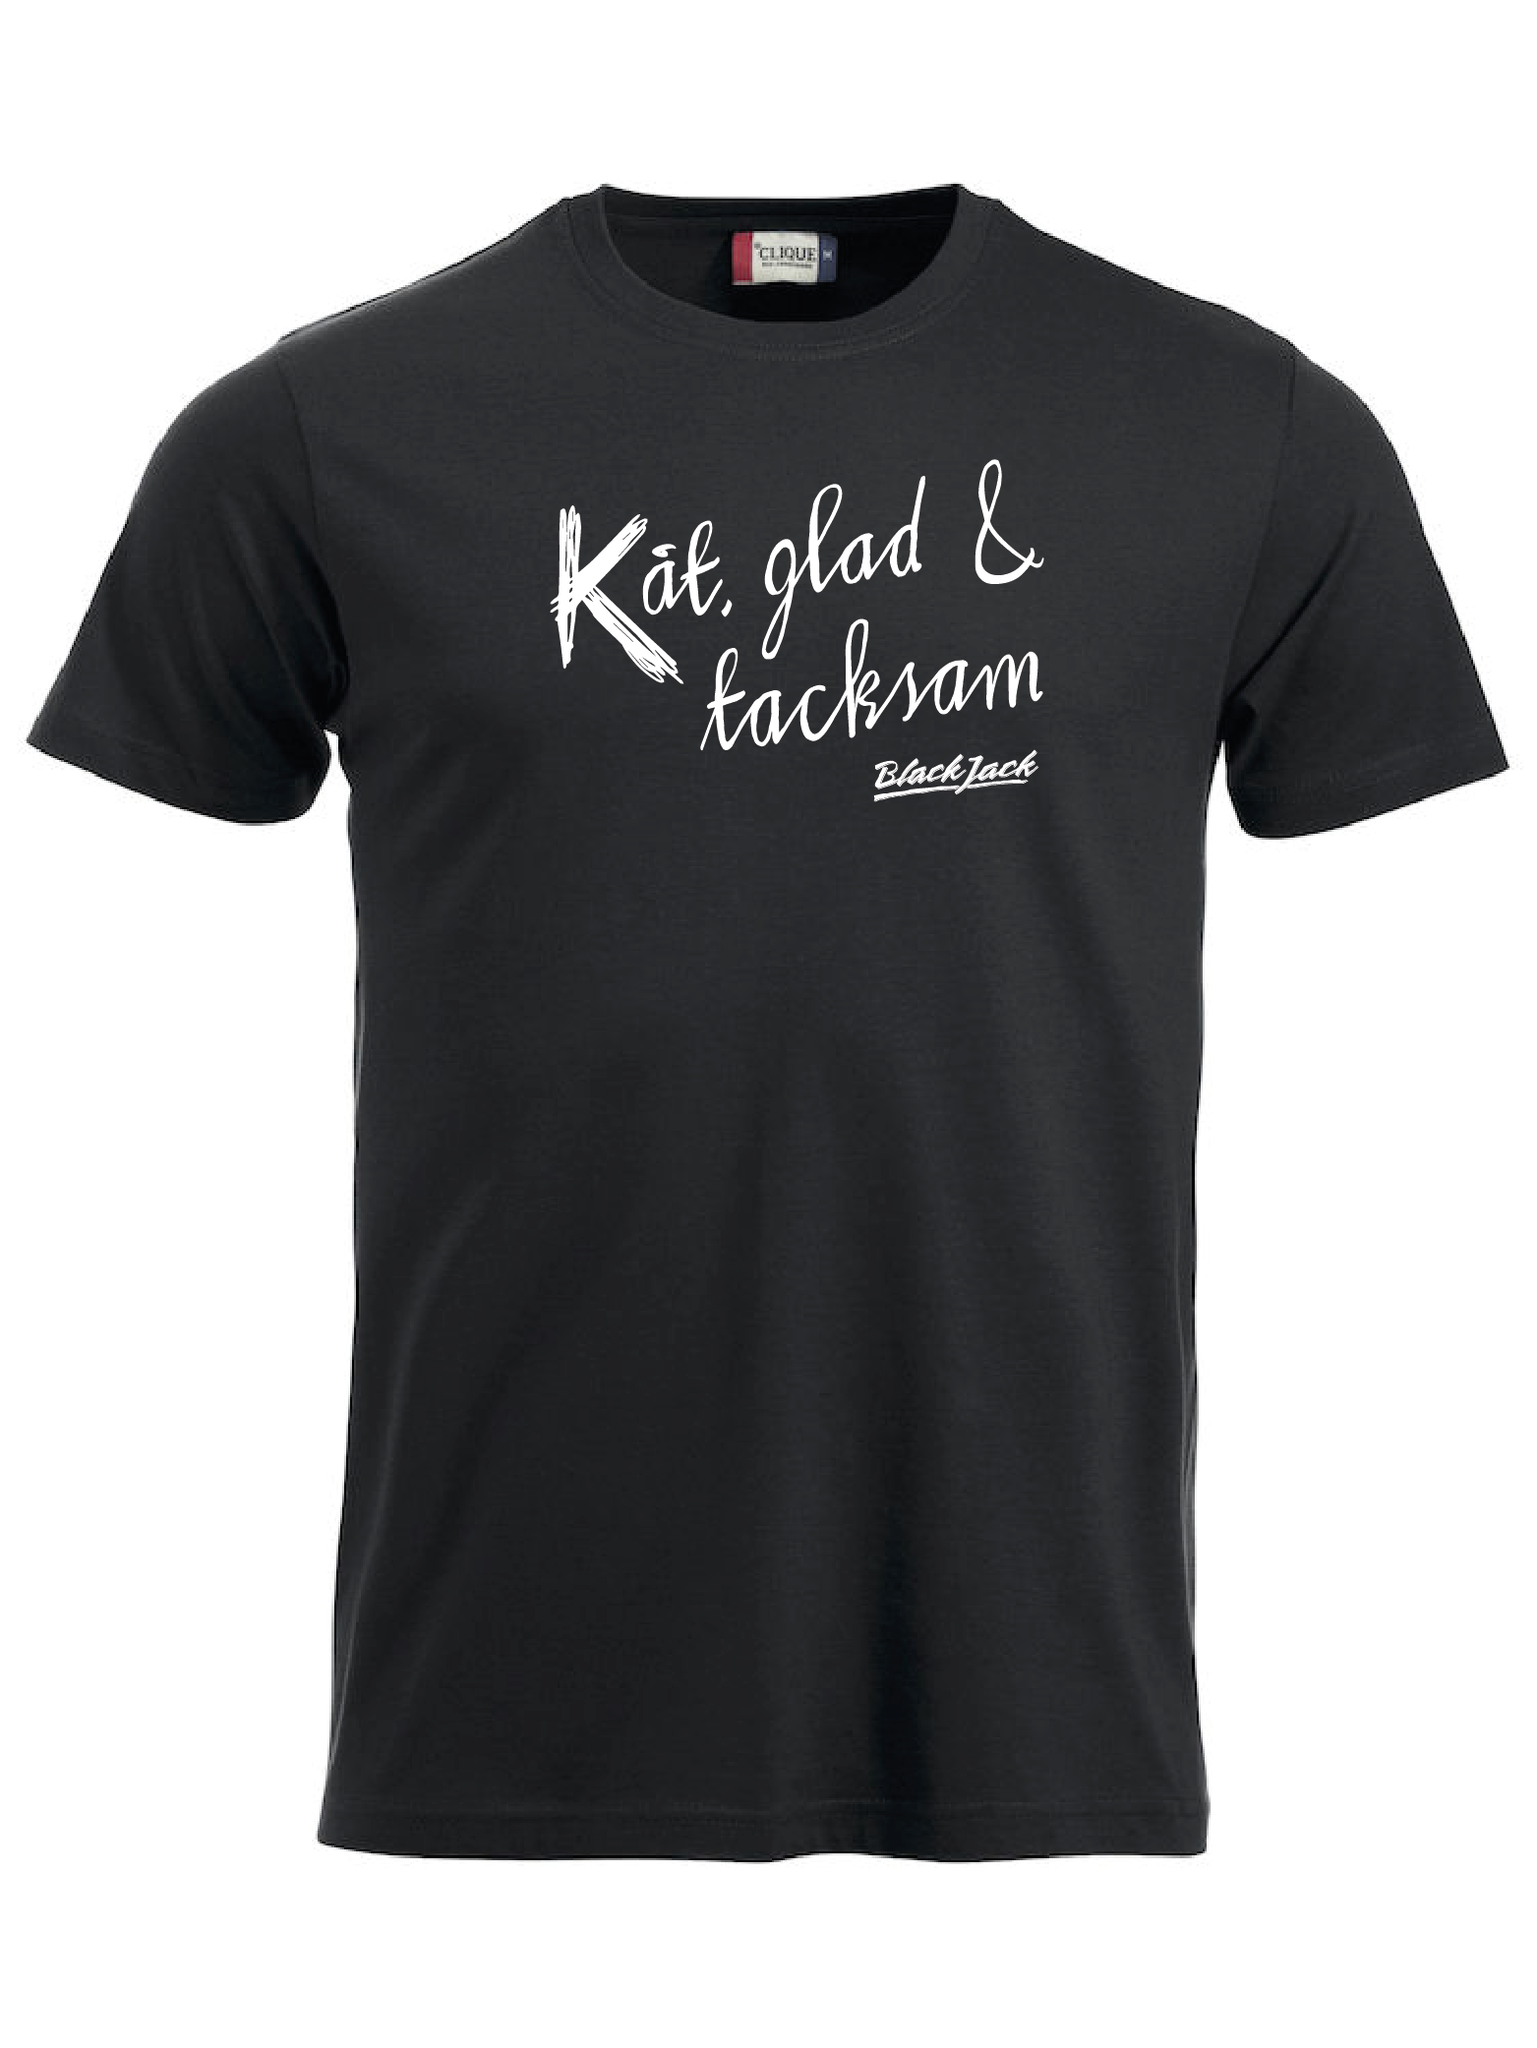 Svart T-shirt "Black Jack Kåt, glad & tacksam"